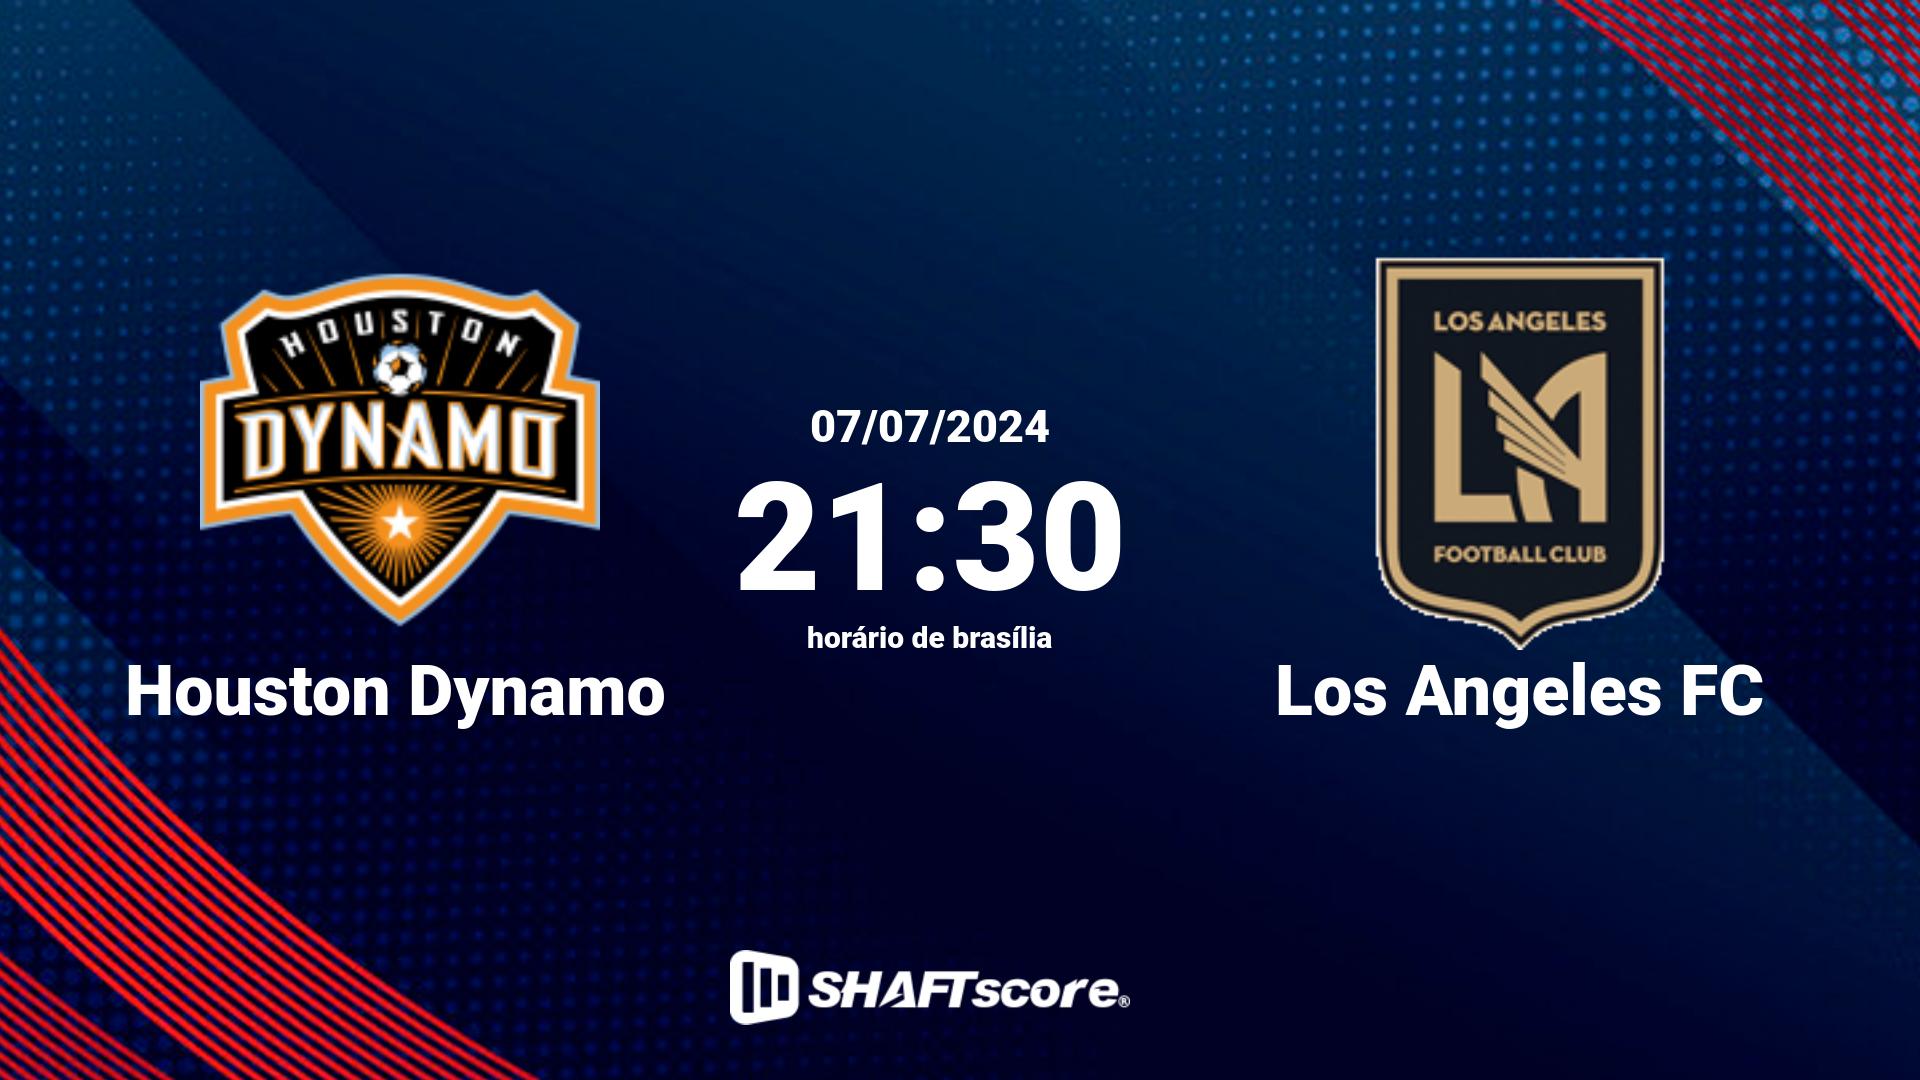 Estatísticas do jogo Houston Dynamo vs Los Angeles FC 07.07 21:30